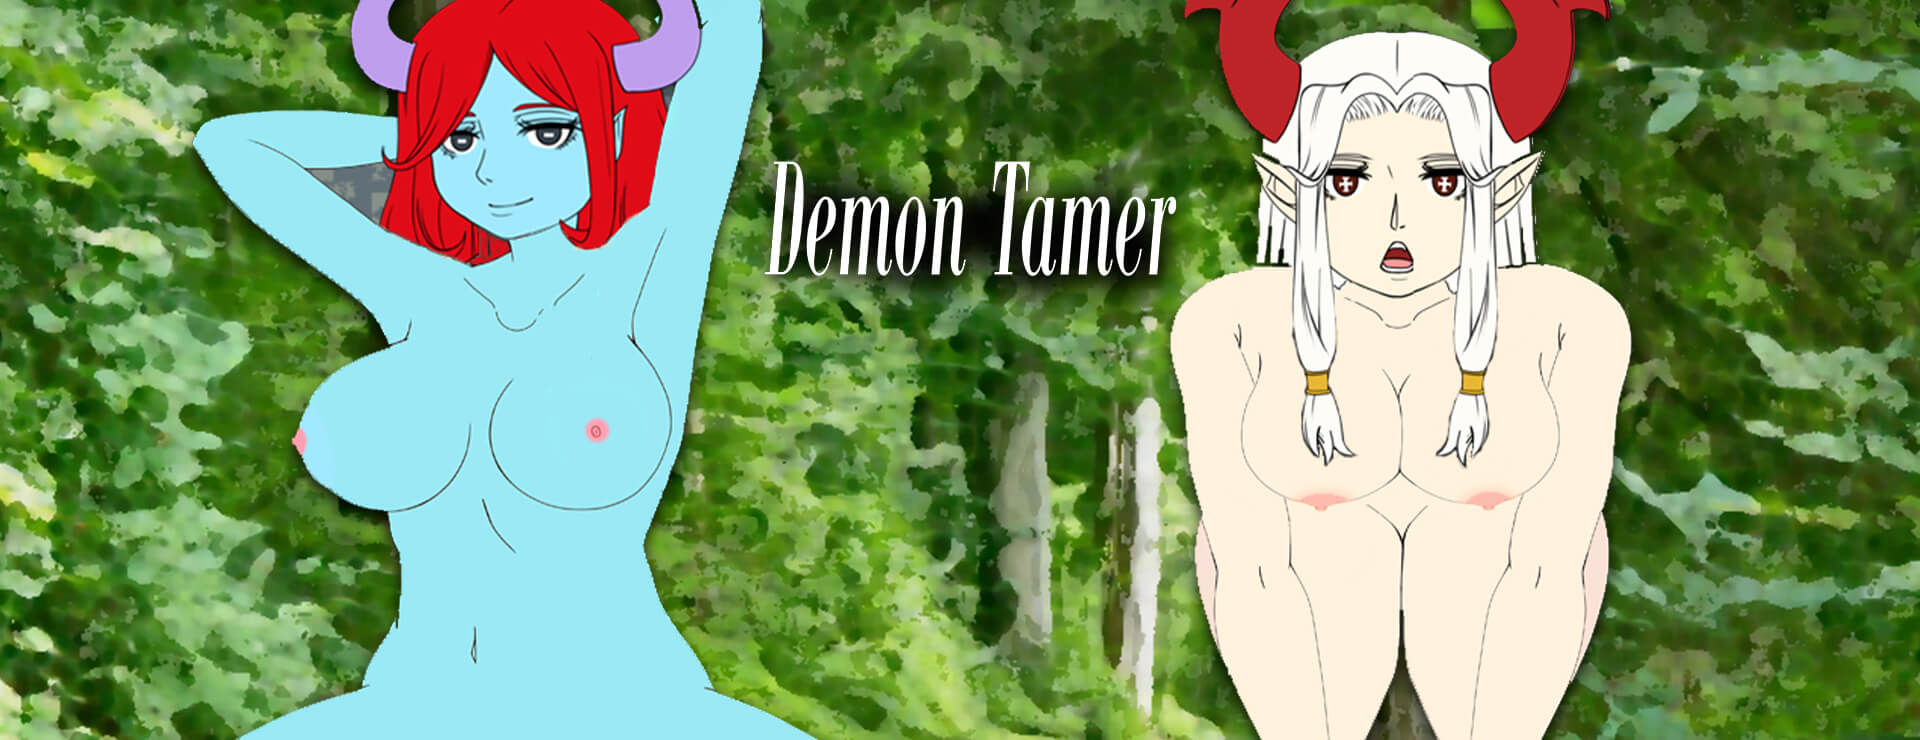 Demon Tamer - RPG Spiel